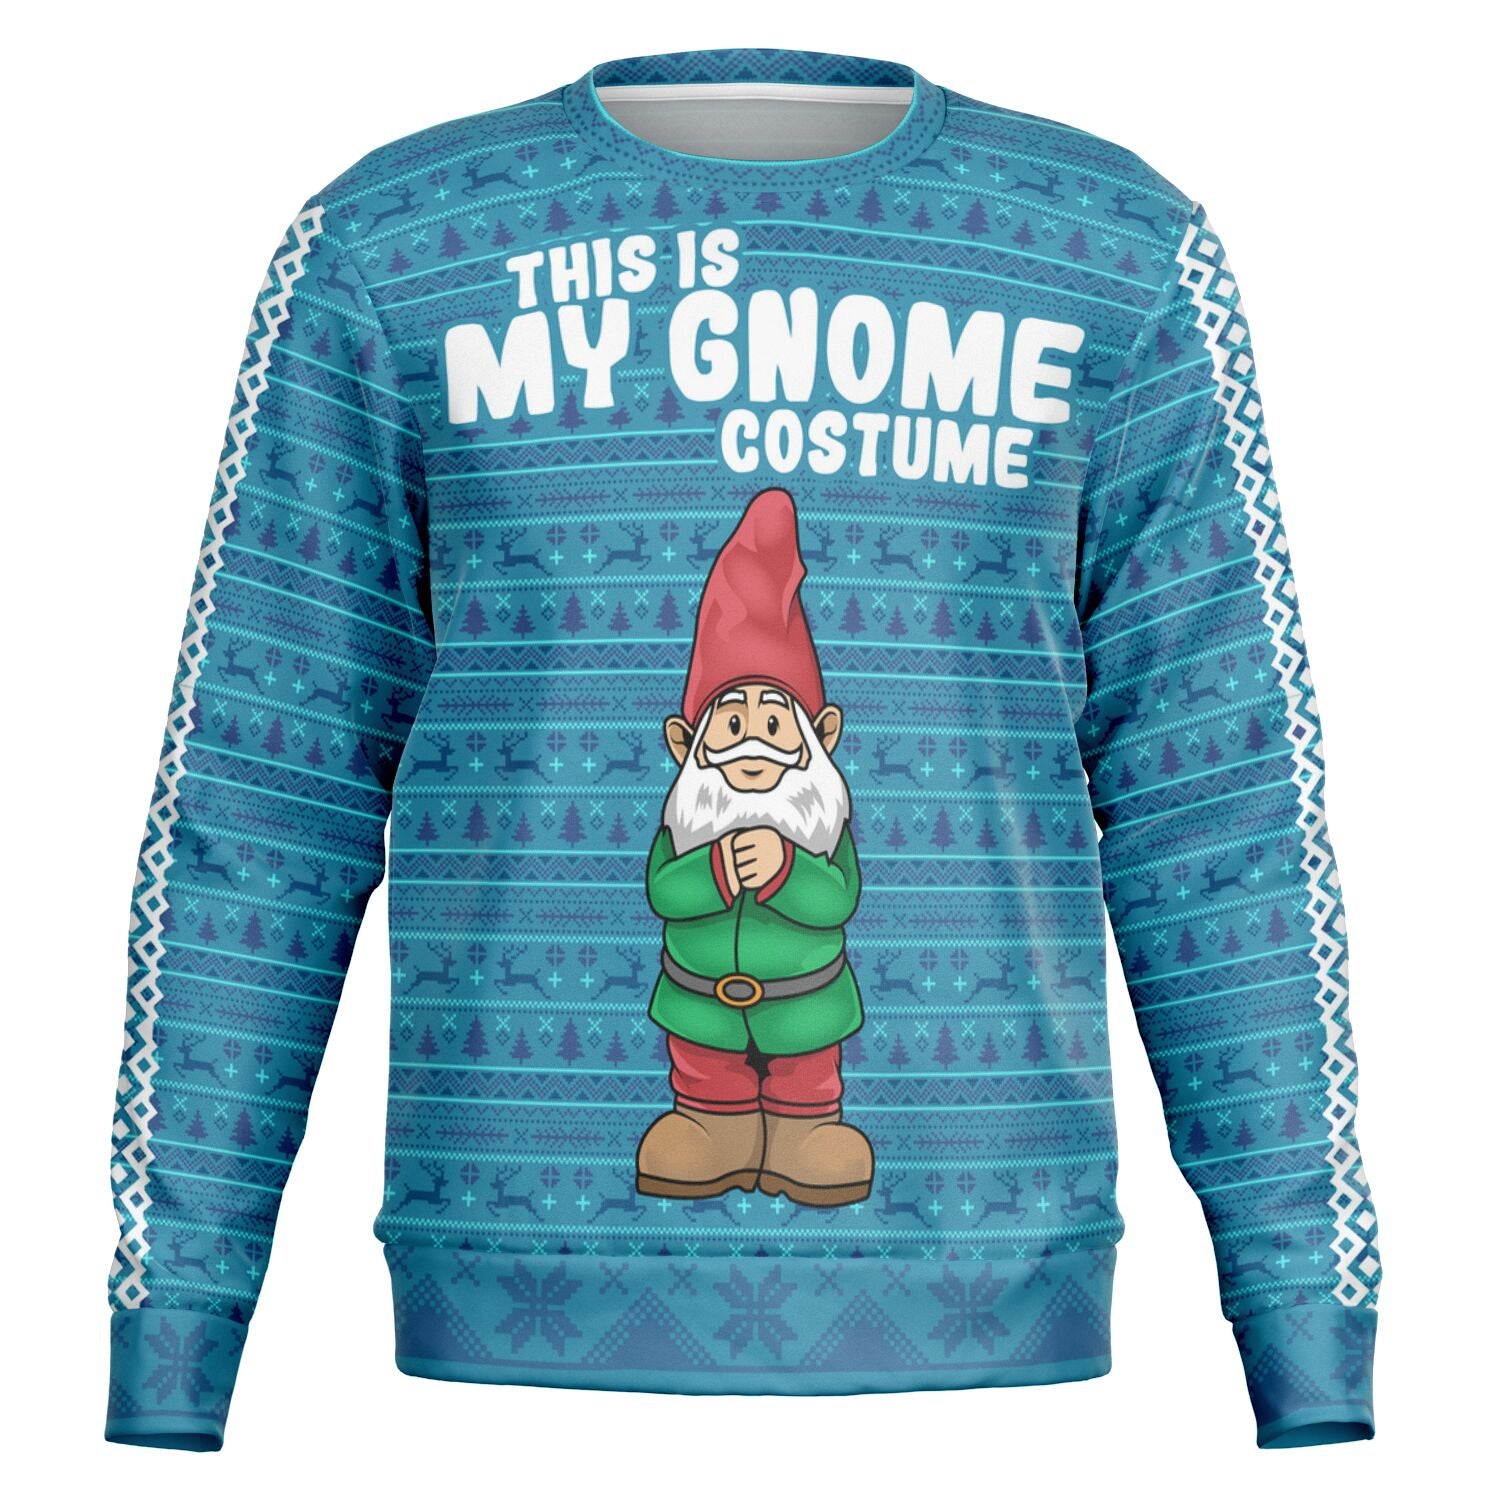 Gnome Costume Sweatshirt